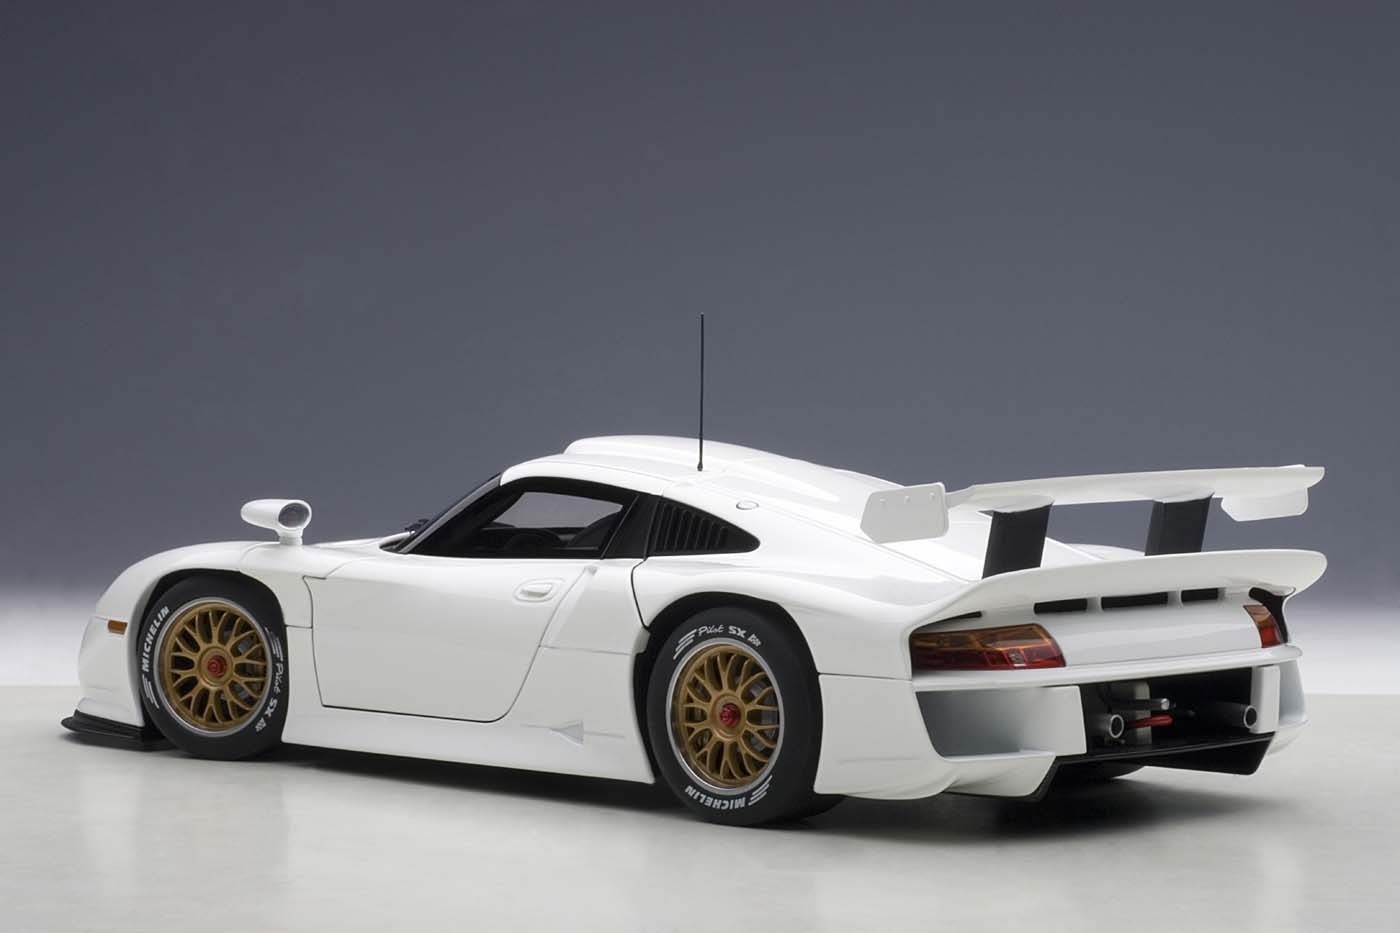 UT Models Limited 1996 Porsche 911 GT 1 1:18 Scale Diecast Model Car White